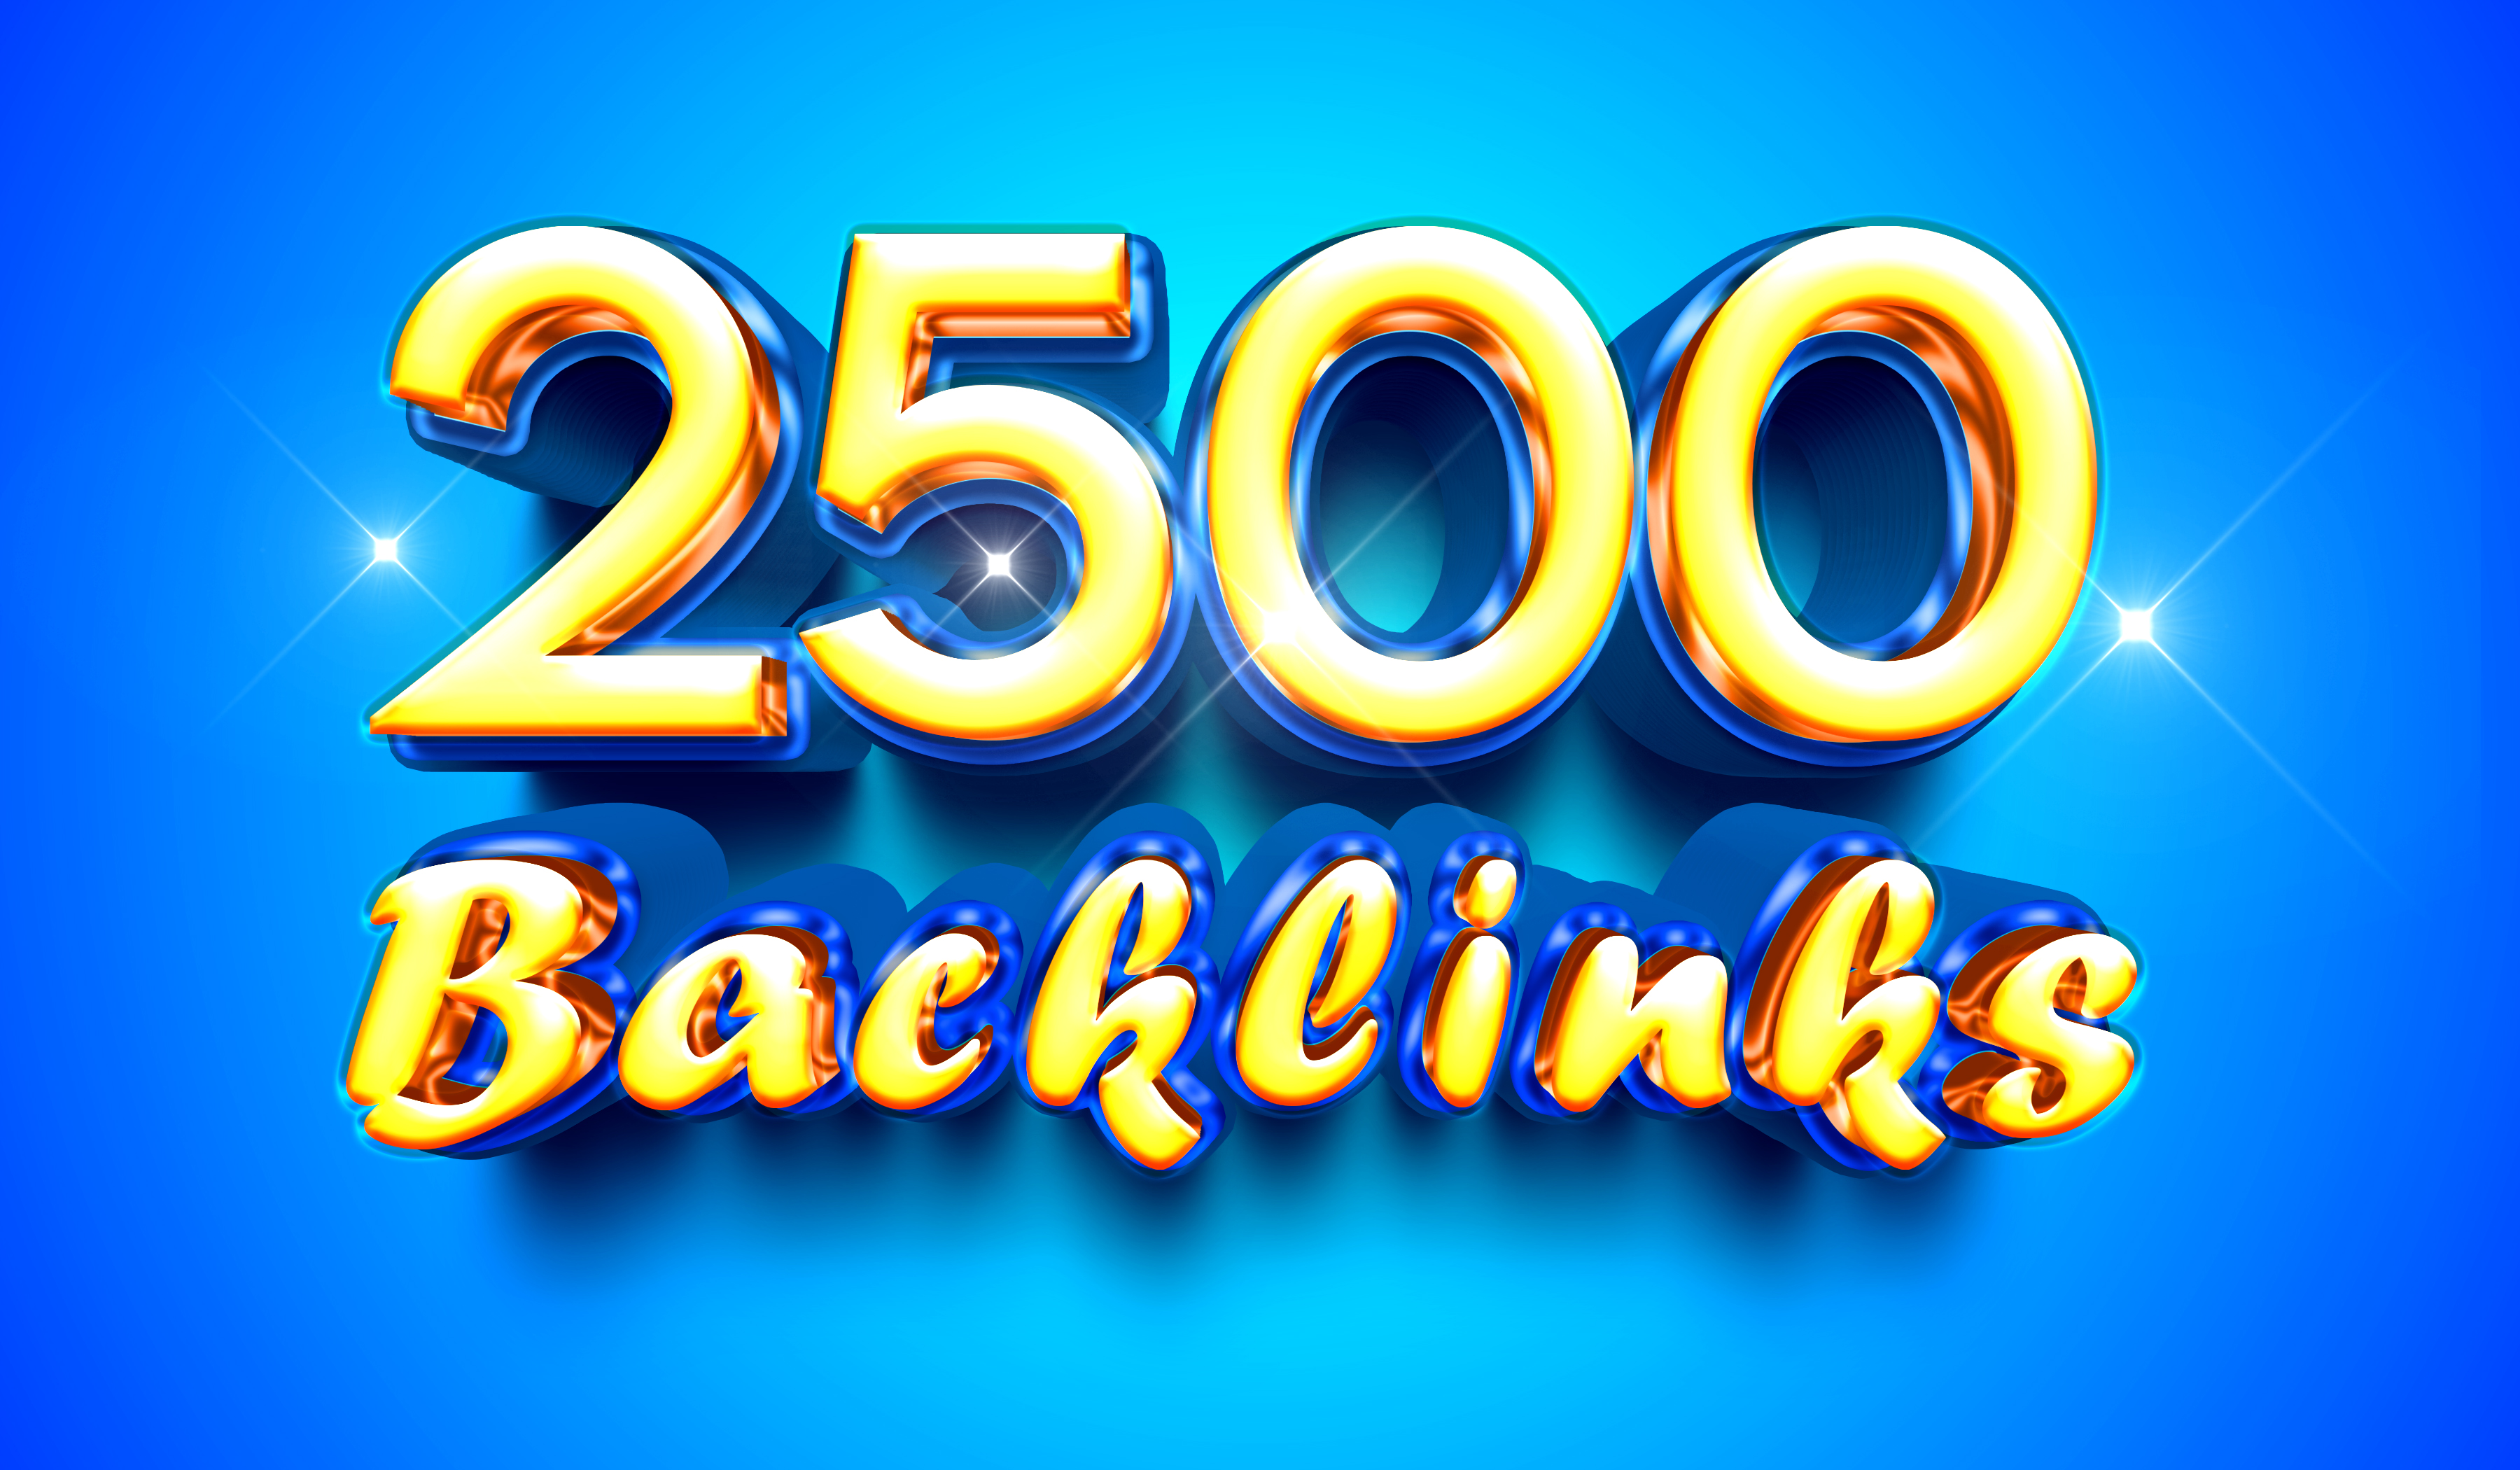 2500 Dofollow backlinks | SEO Backlinks | Contextual | Web 2.0 Backlinks | - High DA50+